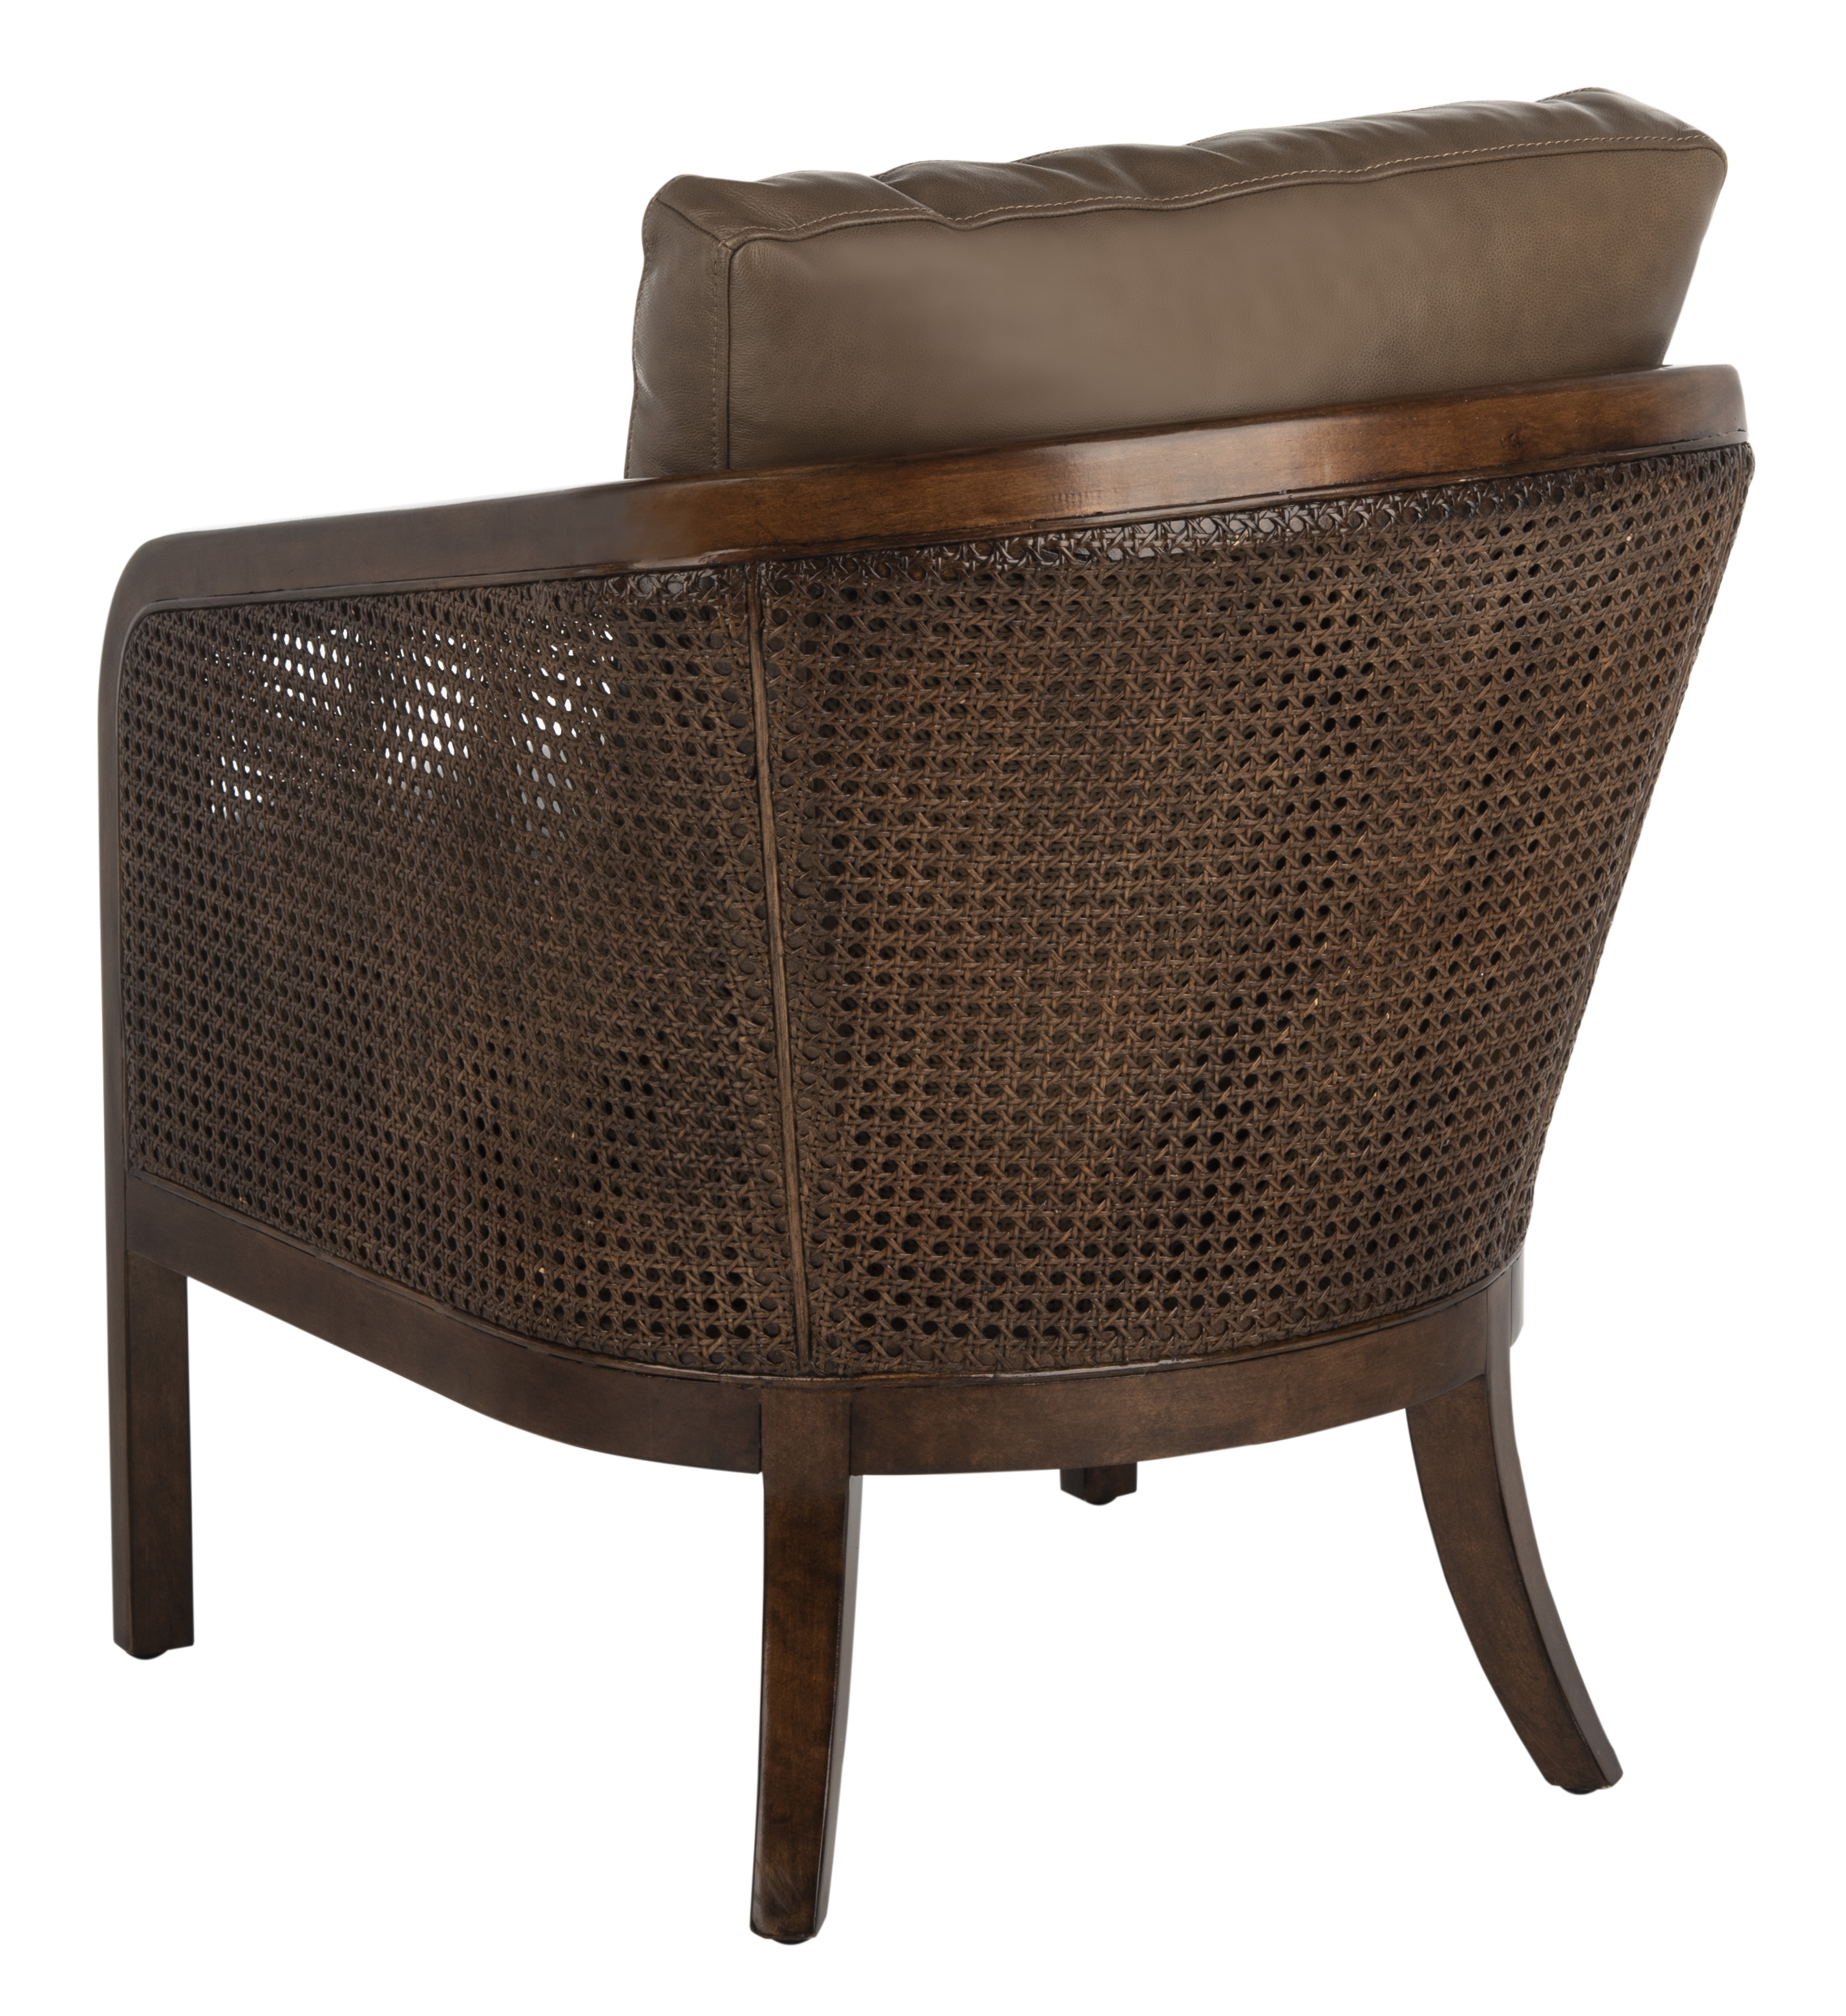 Caruso Barrel Back Chair - Dark Brown - Arlo Home - Image 4